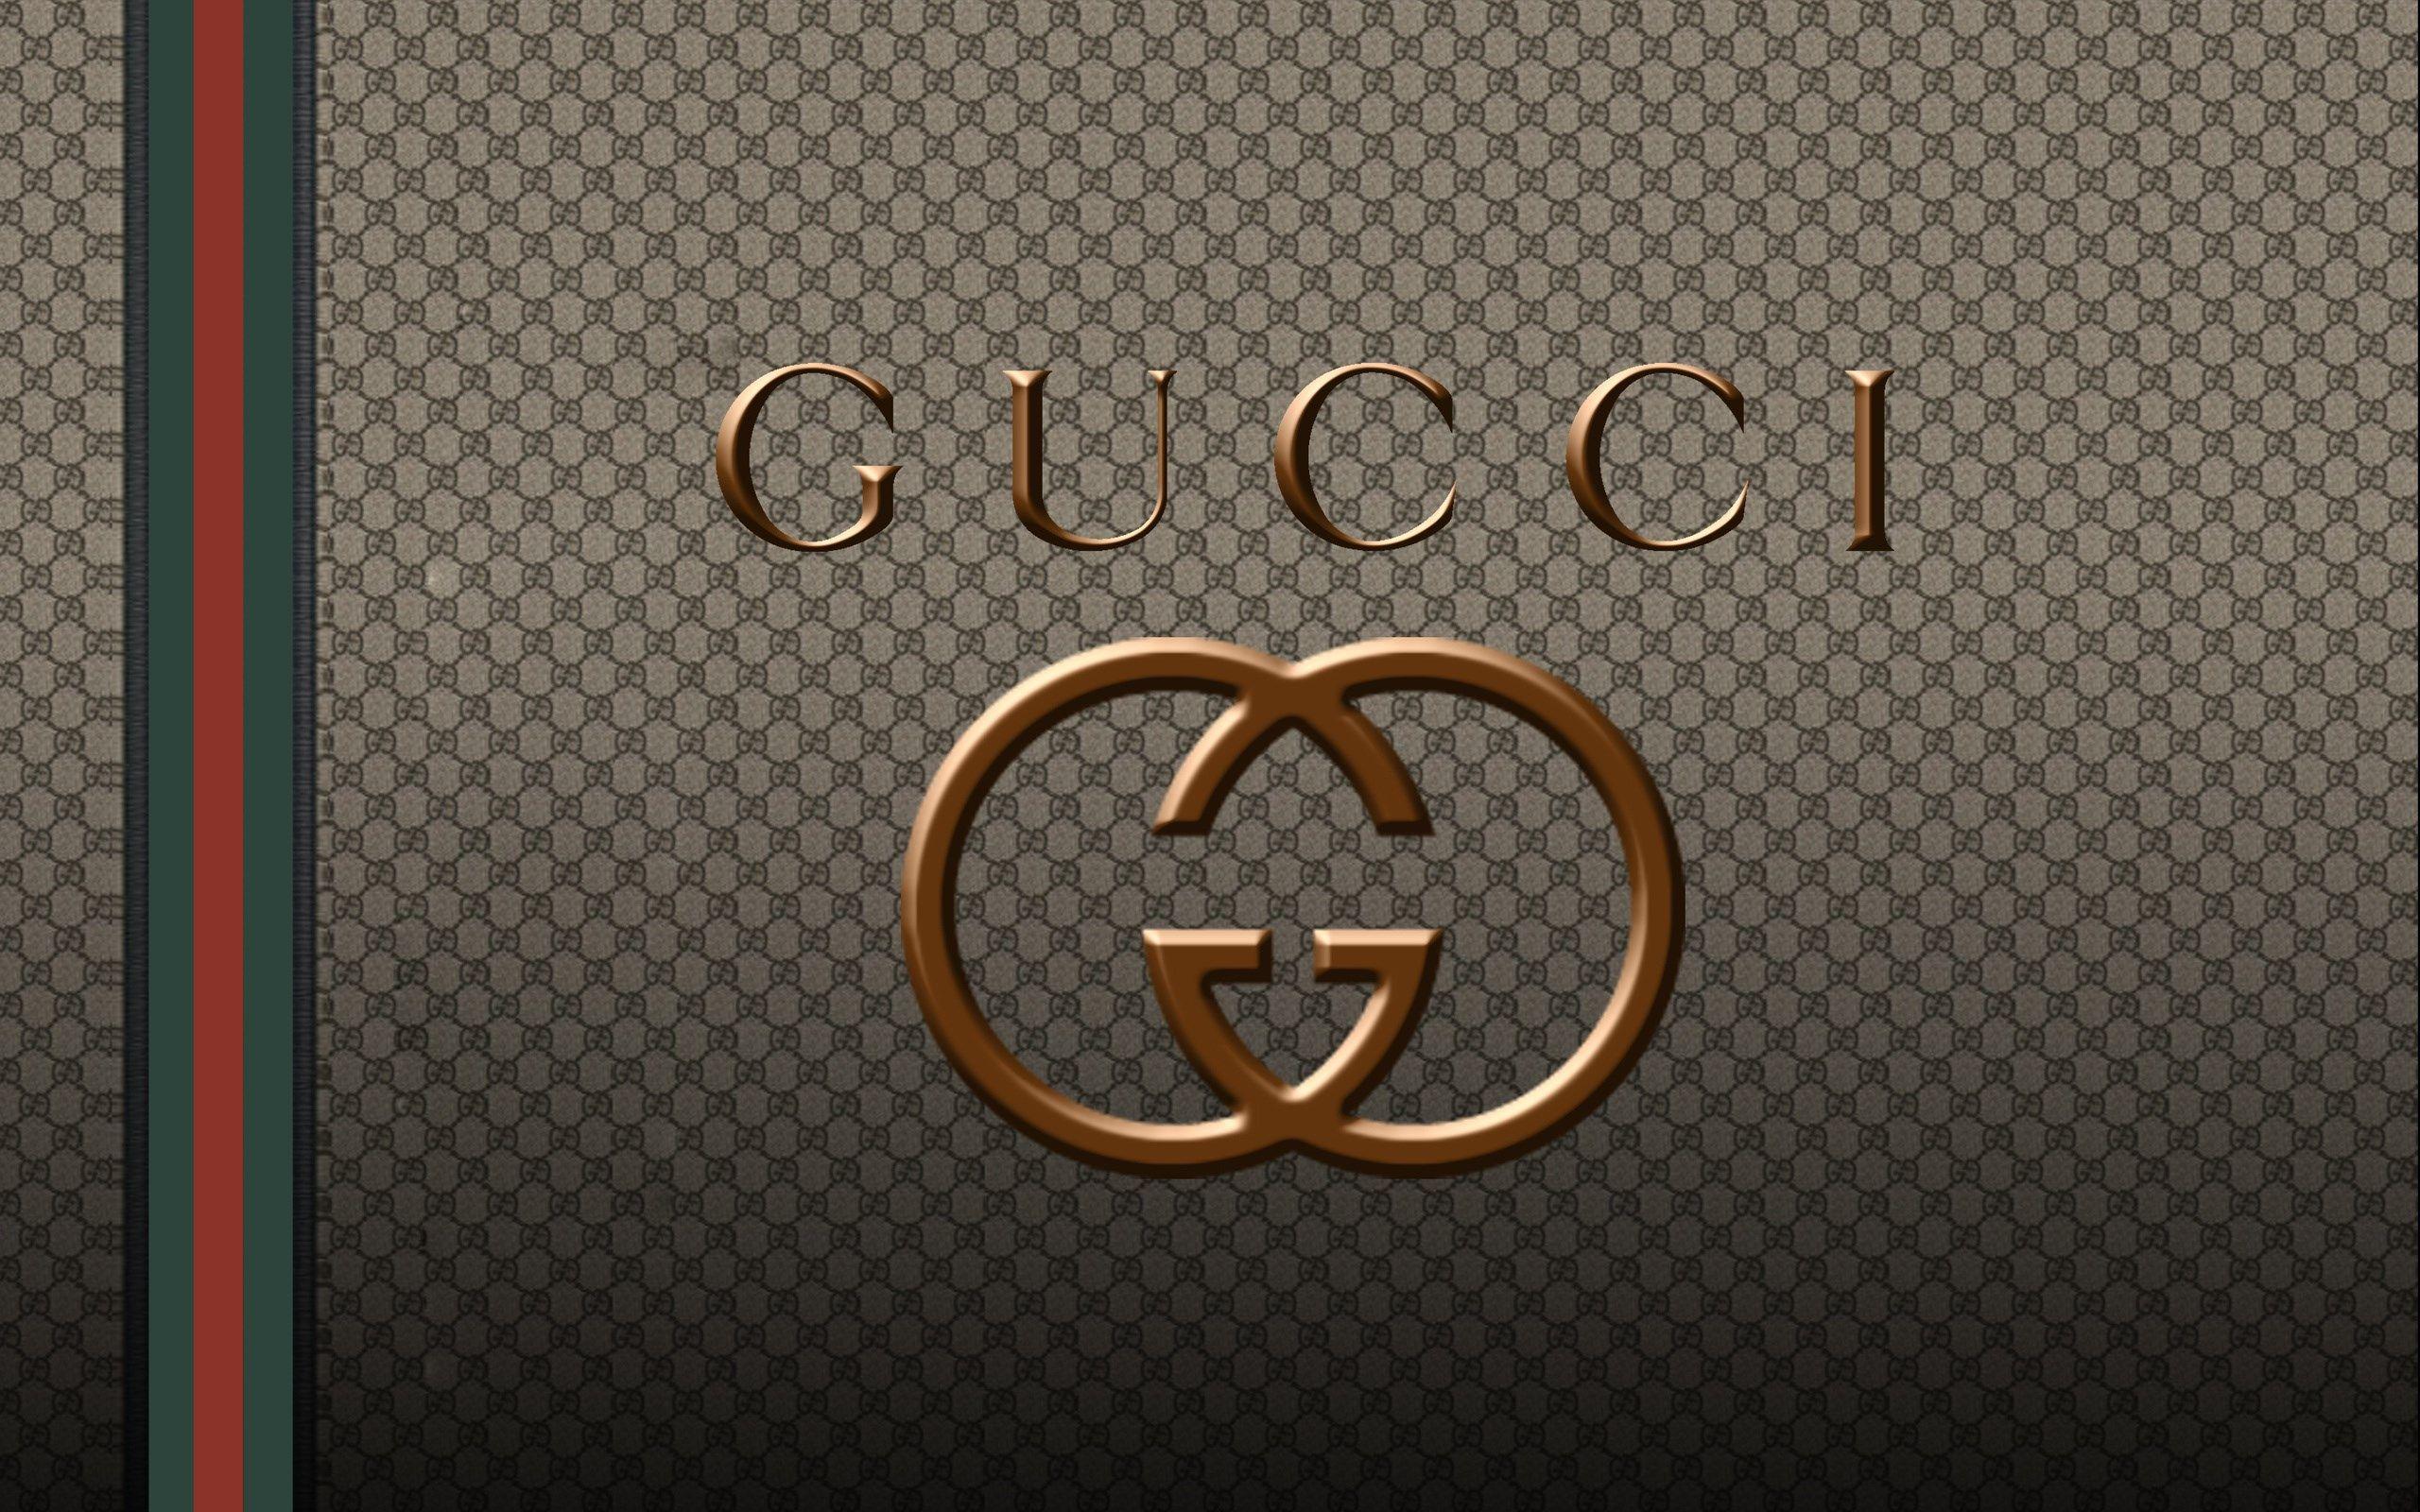 gucci logo wallpaper HD picture image. Logo wallpaper hd, Adidas logo wallpaper, Logos